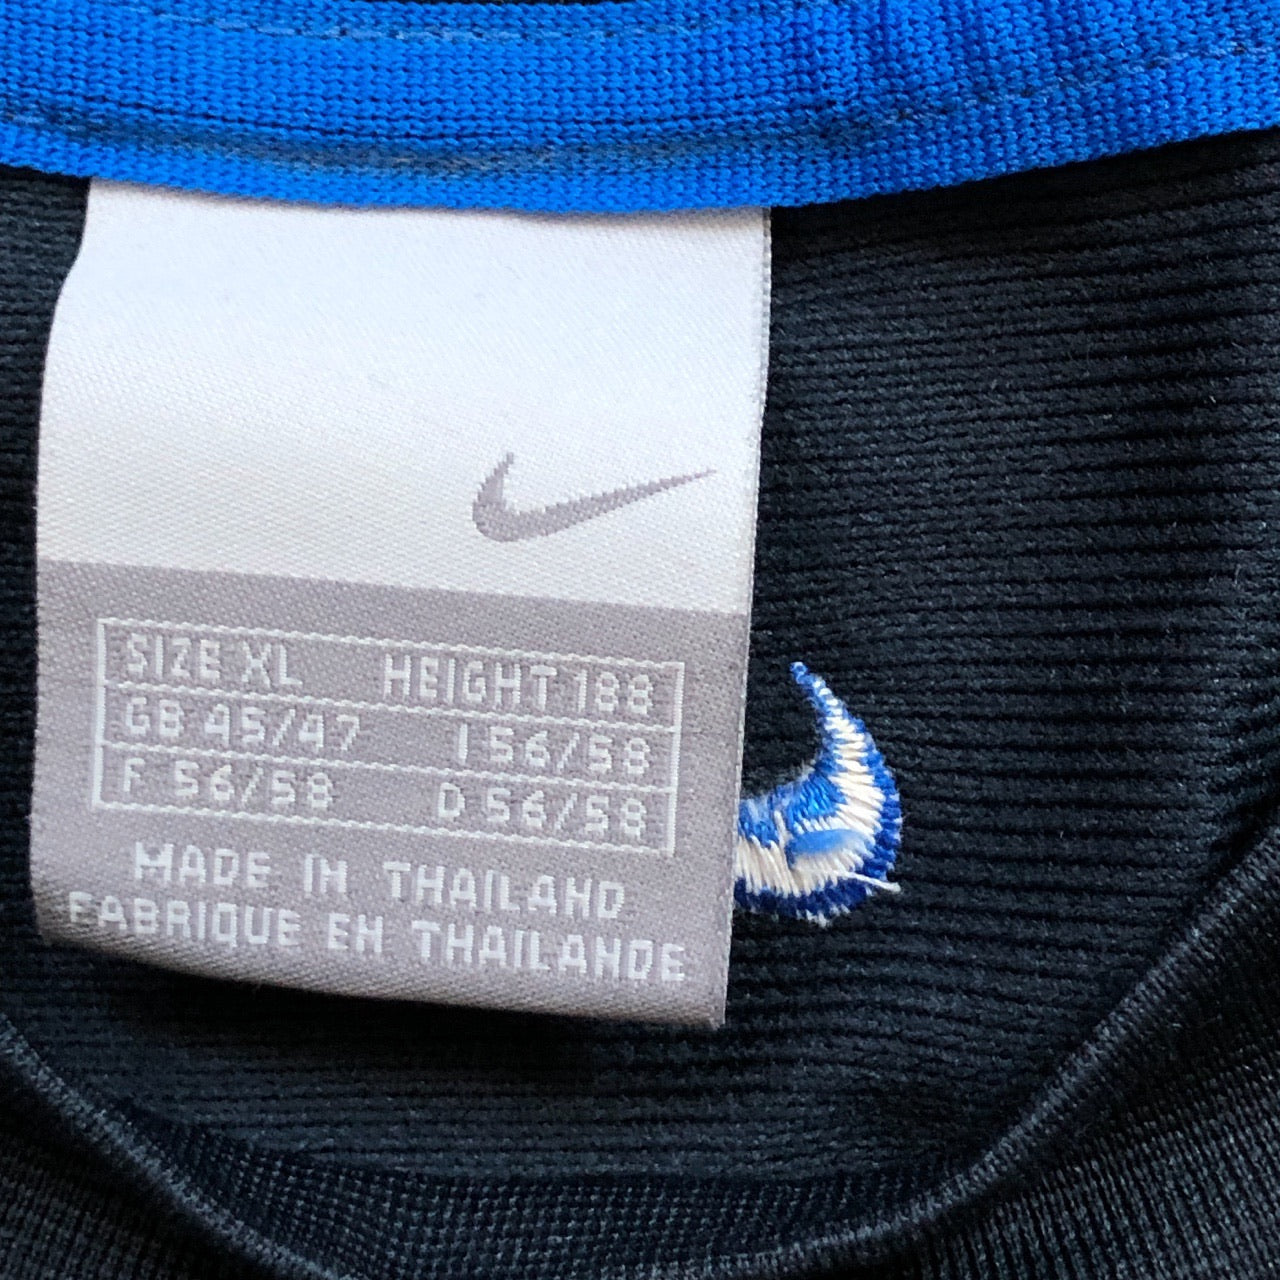 Nike Vintage Shox T-Shirt (Large)